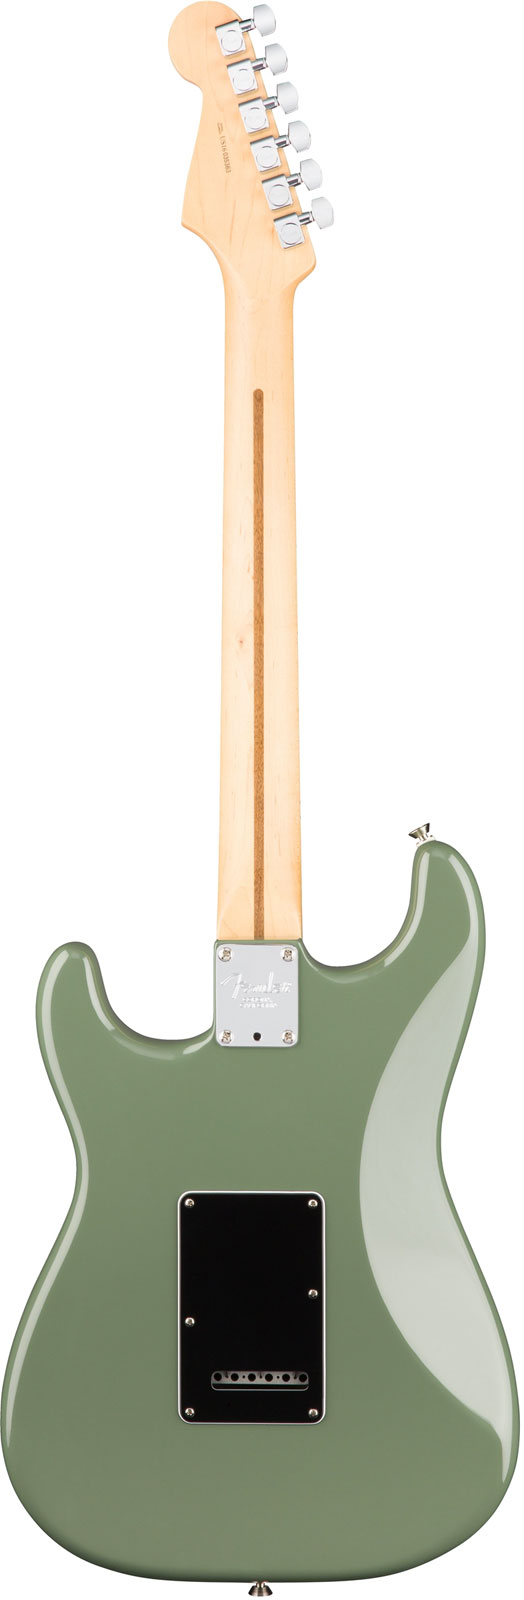 Fender Strat American Professional 2017 3s Usa Mn - Antique Olive - Guitarra eléctrica con forma de str. - Variation 2